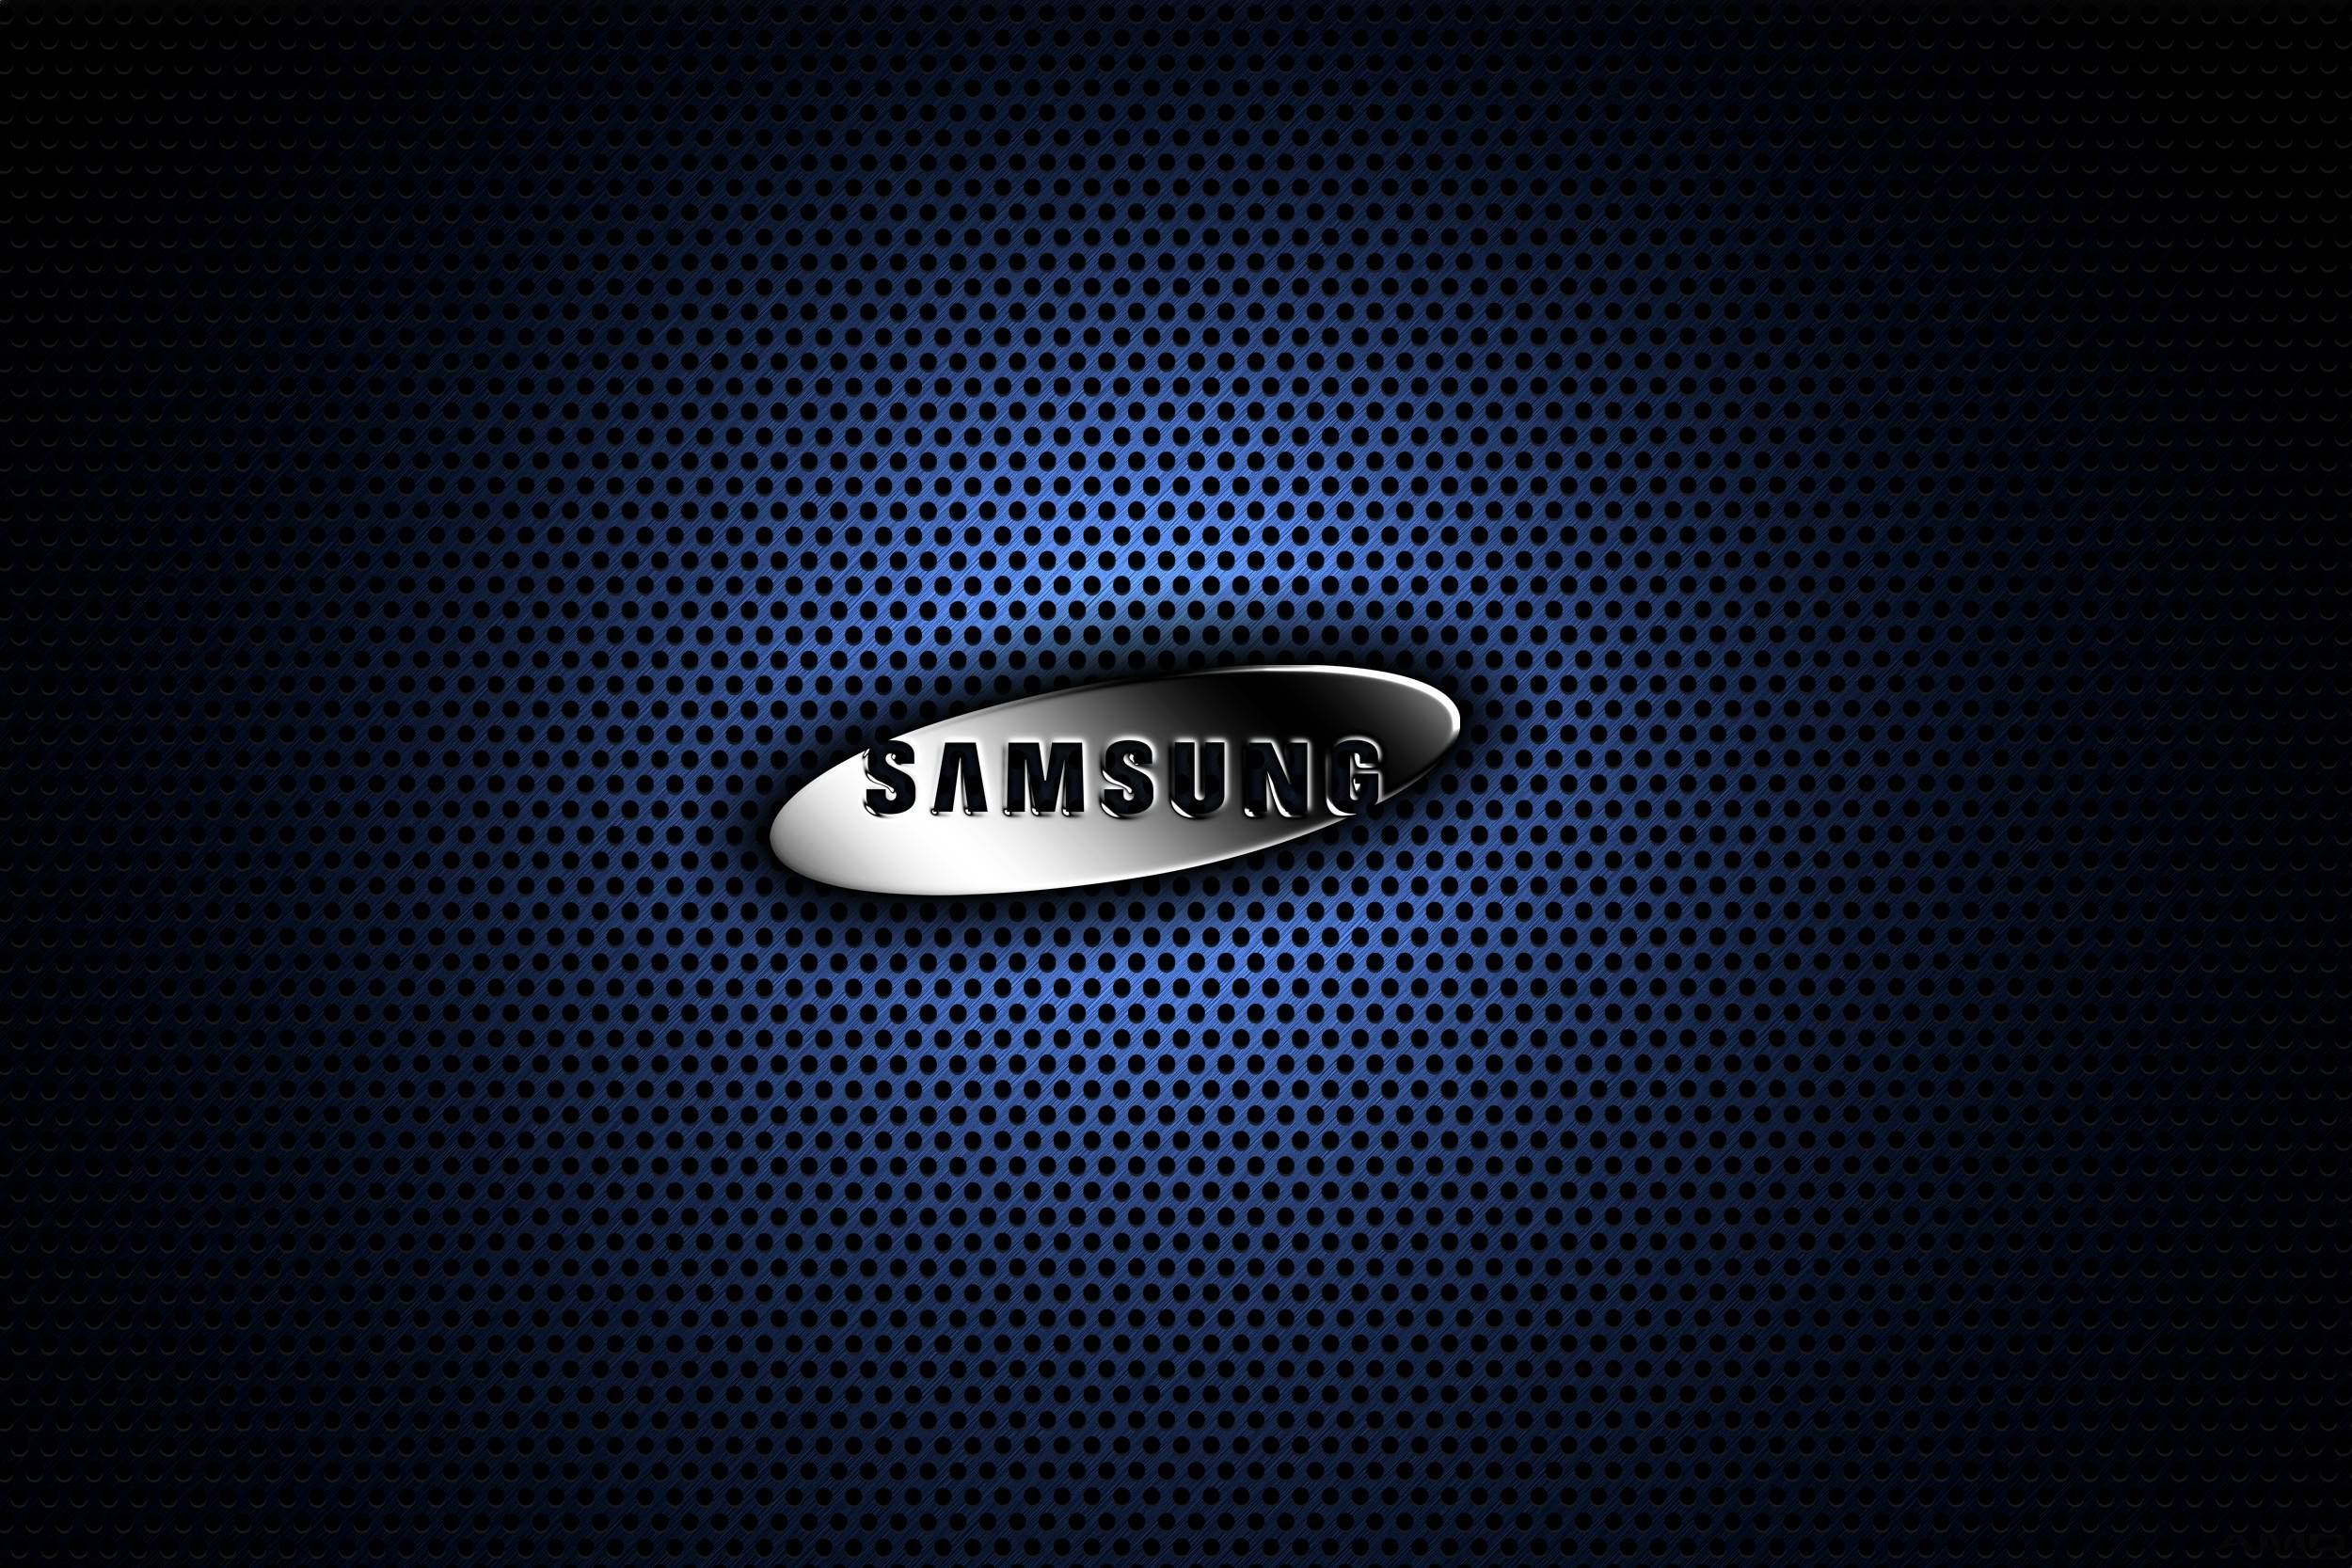 Samsung wallpaper hd